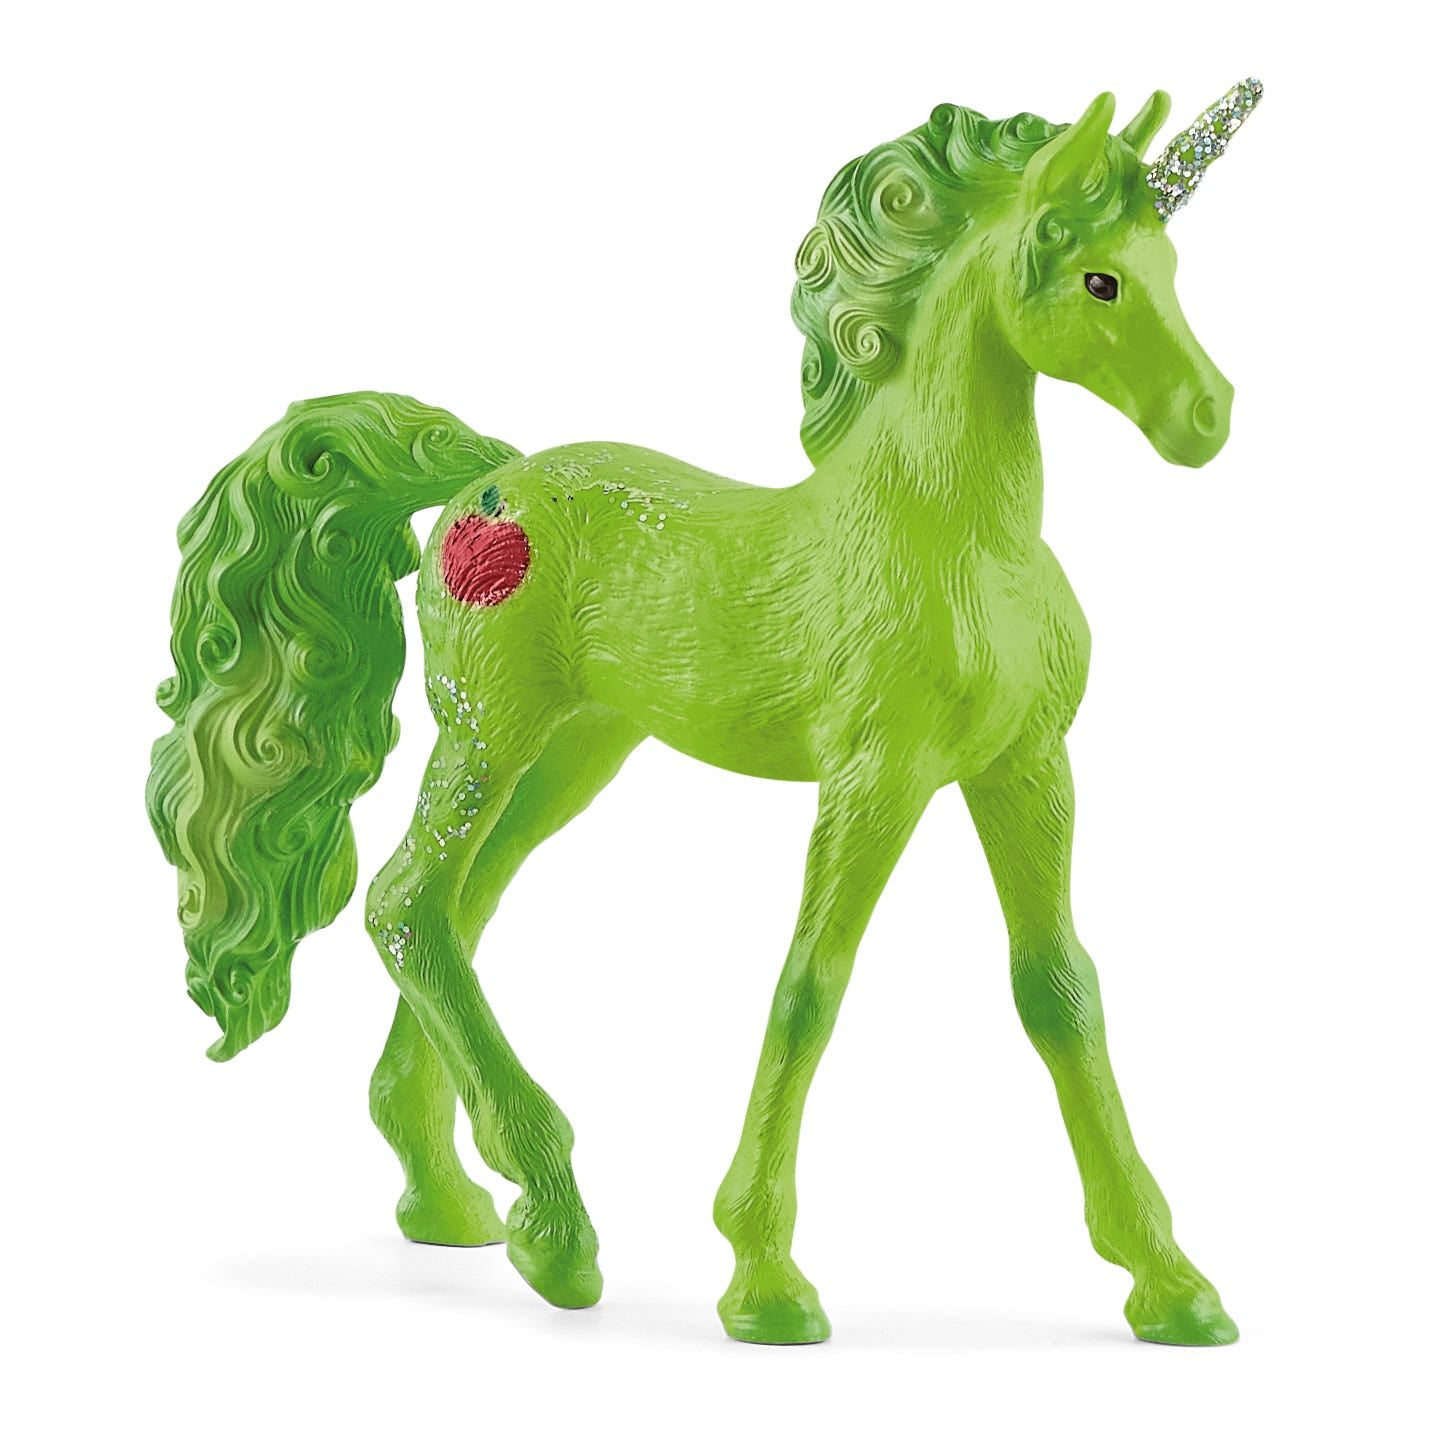 6-Piece BAYALA® Fruity Collectible Unicorn Bundle